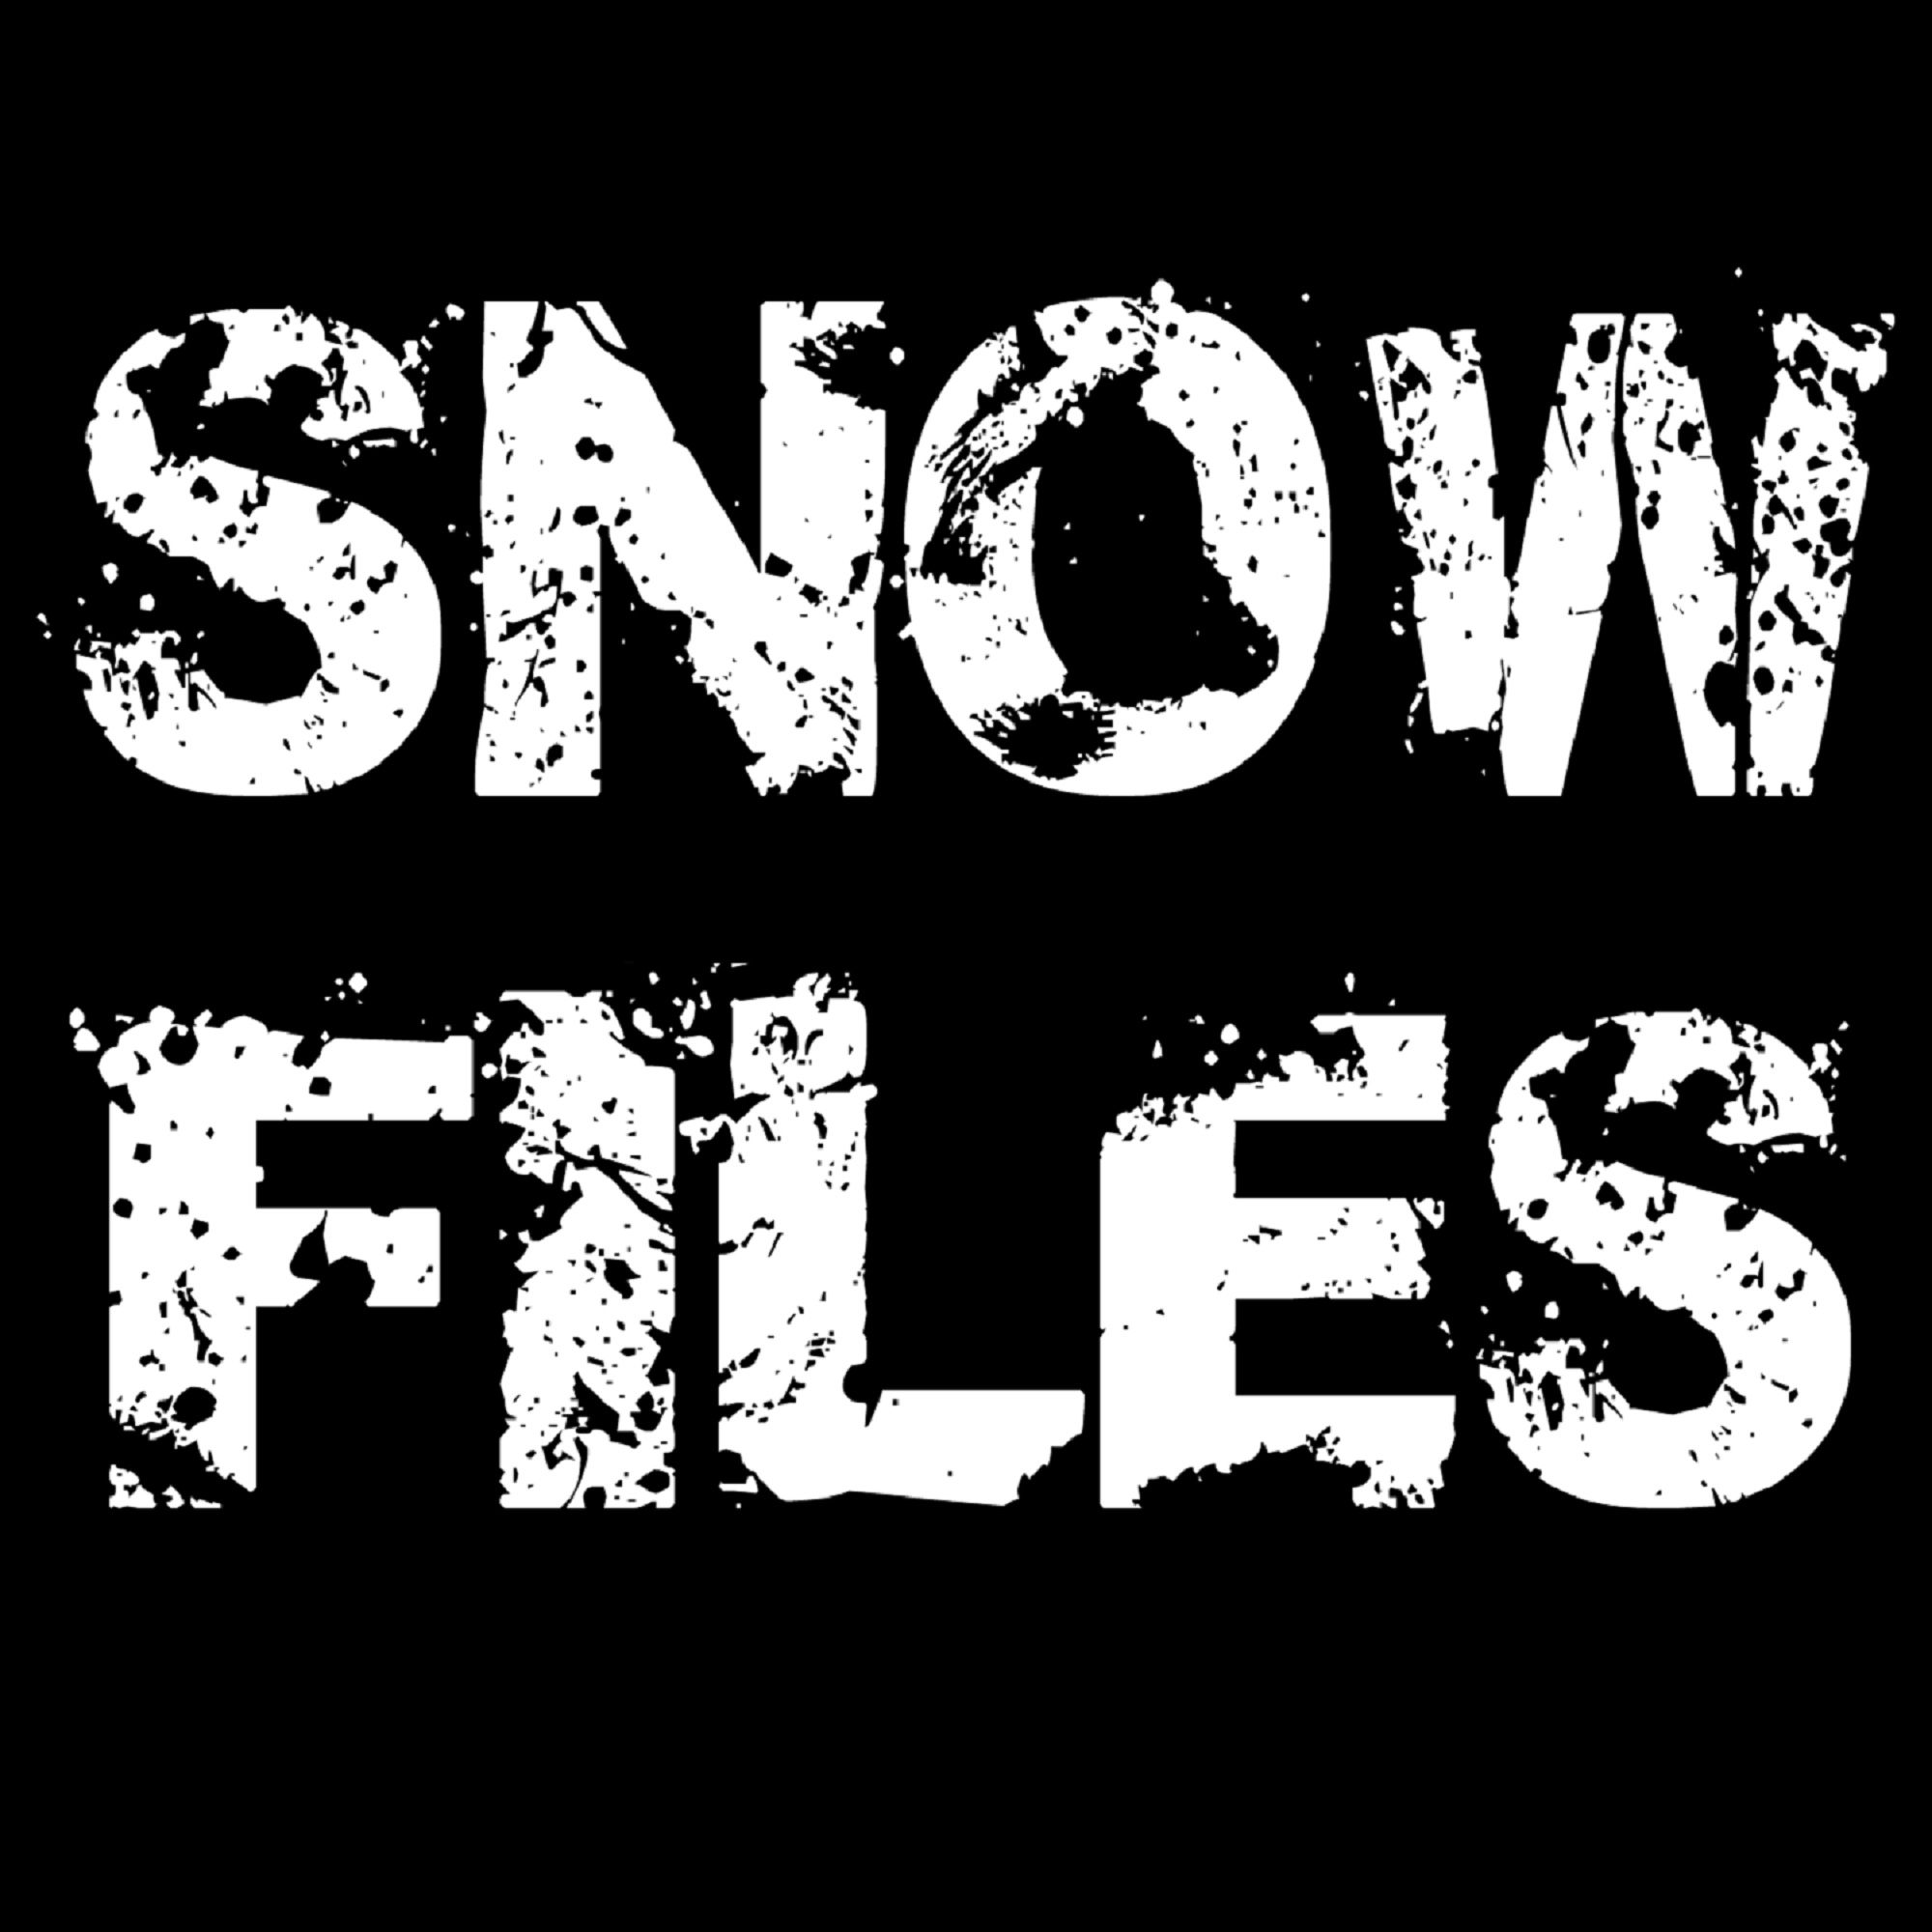 S1-Snow Files Trailer - Premieres March 2, 2020